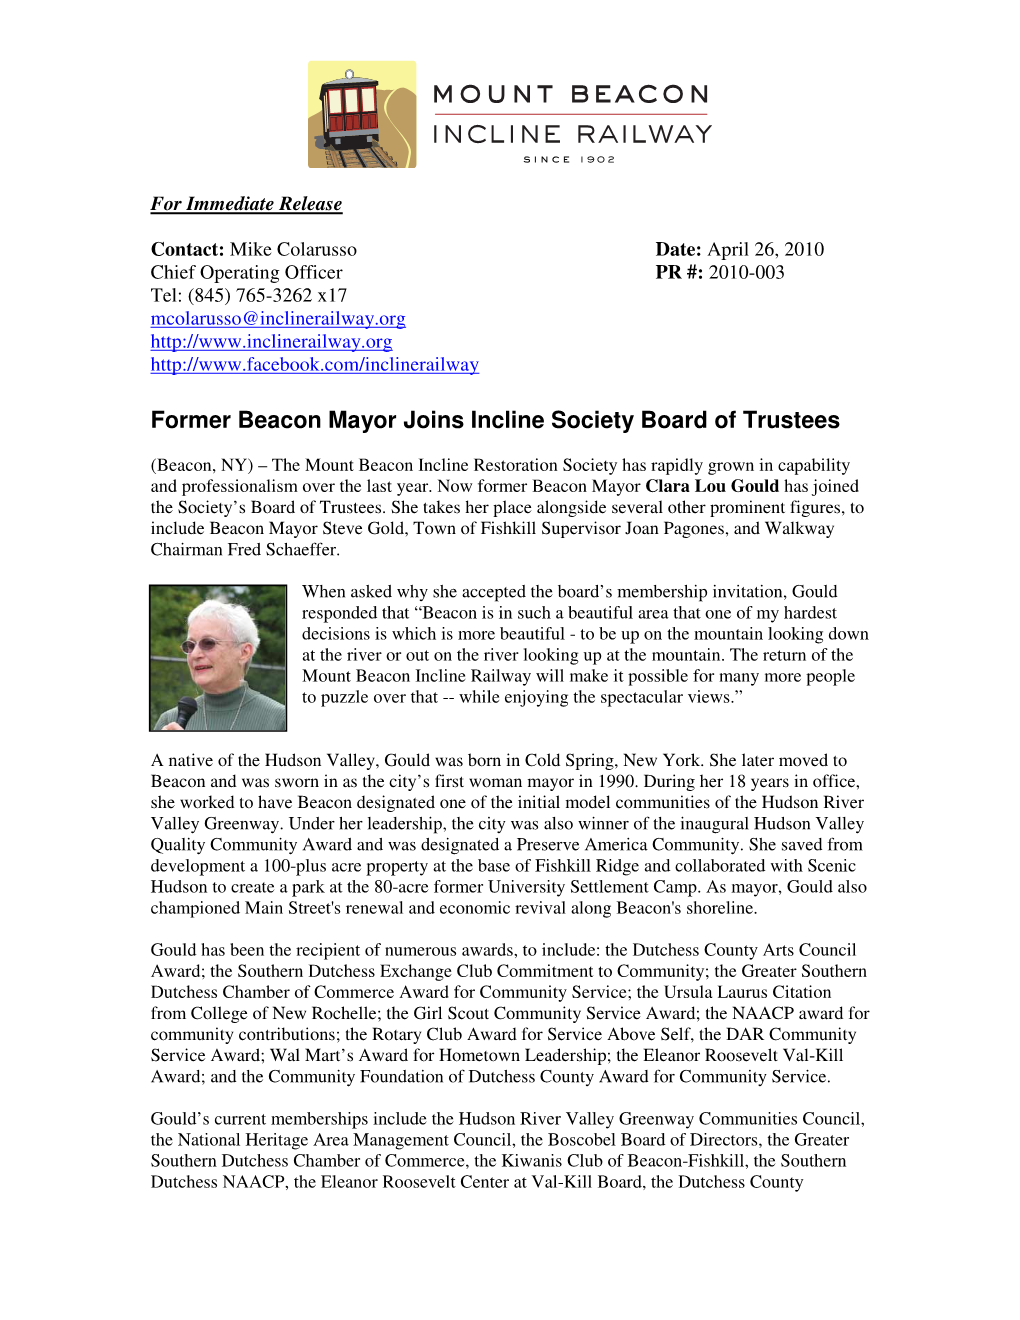 Former Beacon Mayor Joins Incline Society Board of Trustees